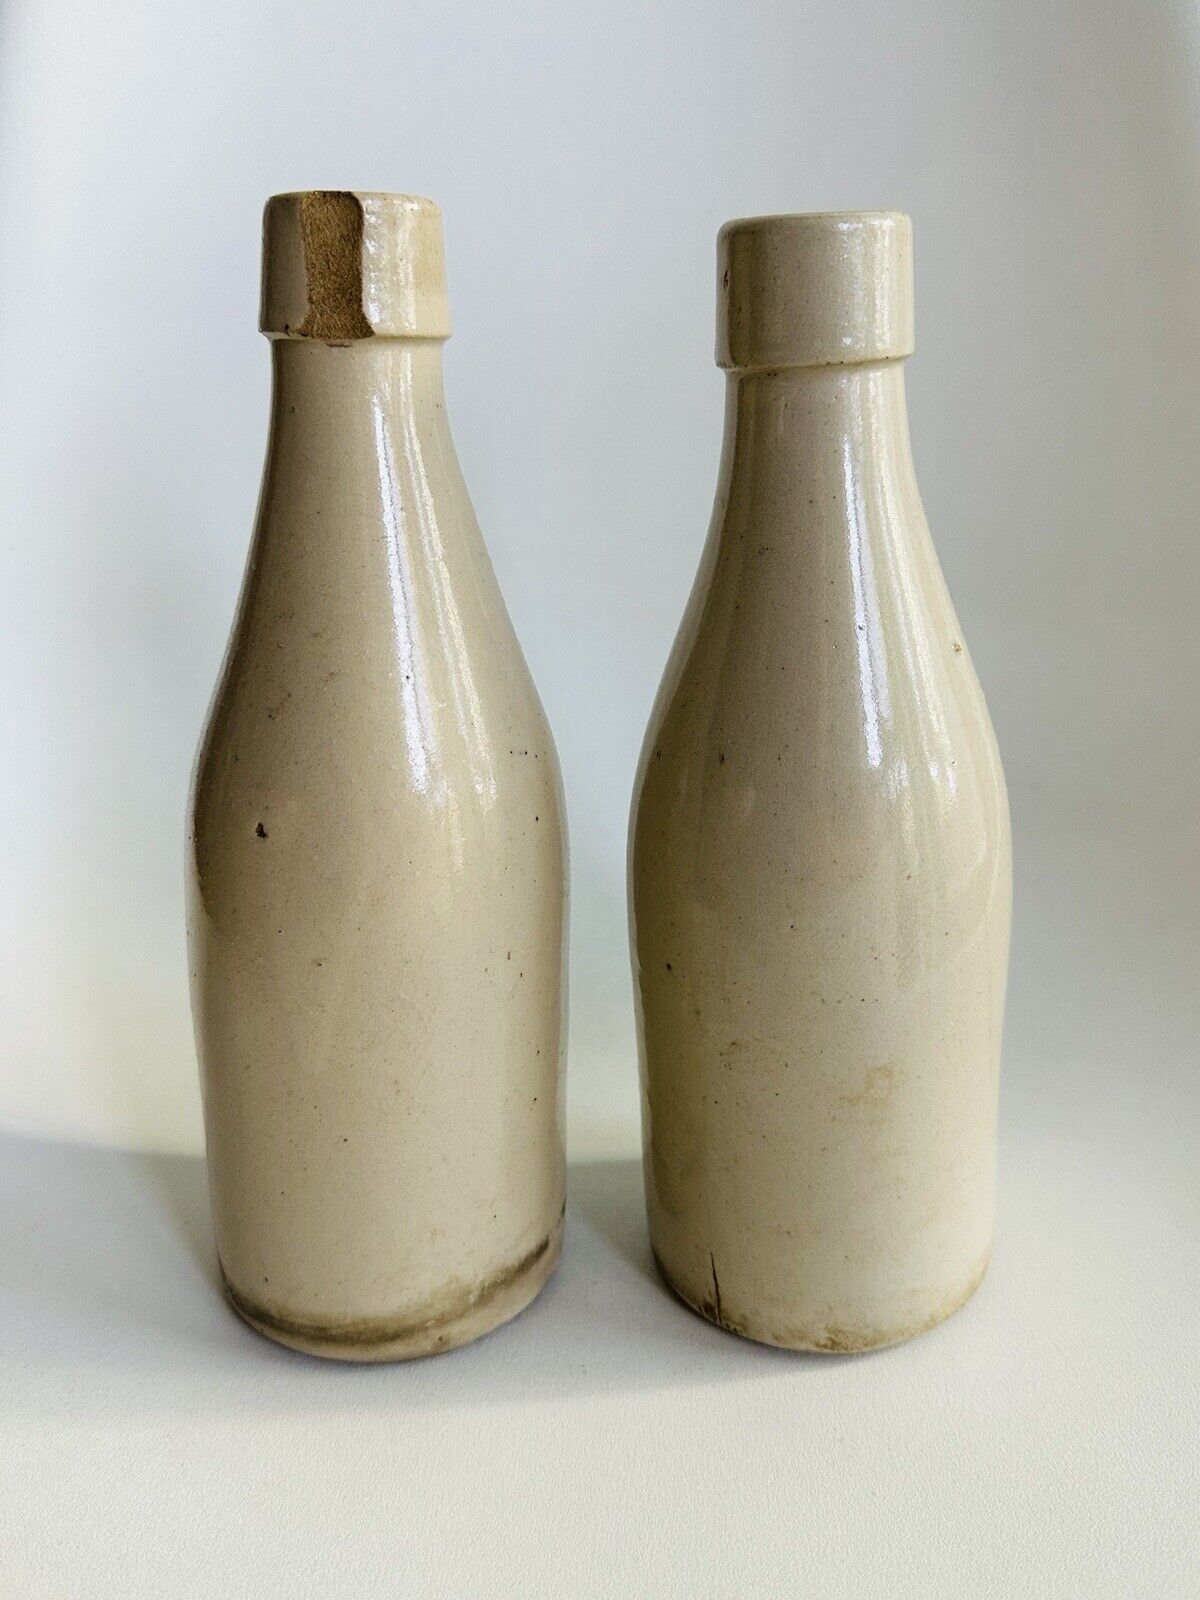 Antique Stoneware Beer Bottle Jug Vessel Pair